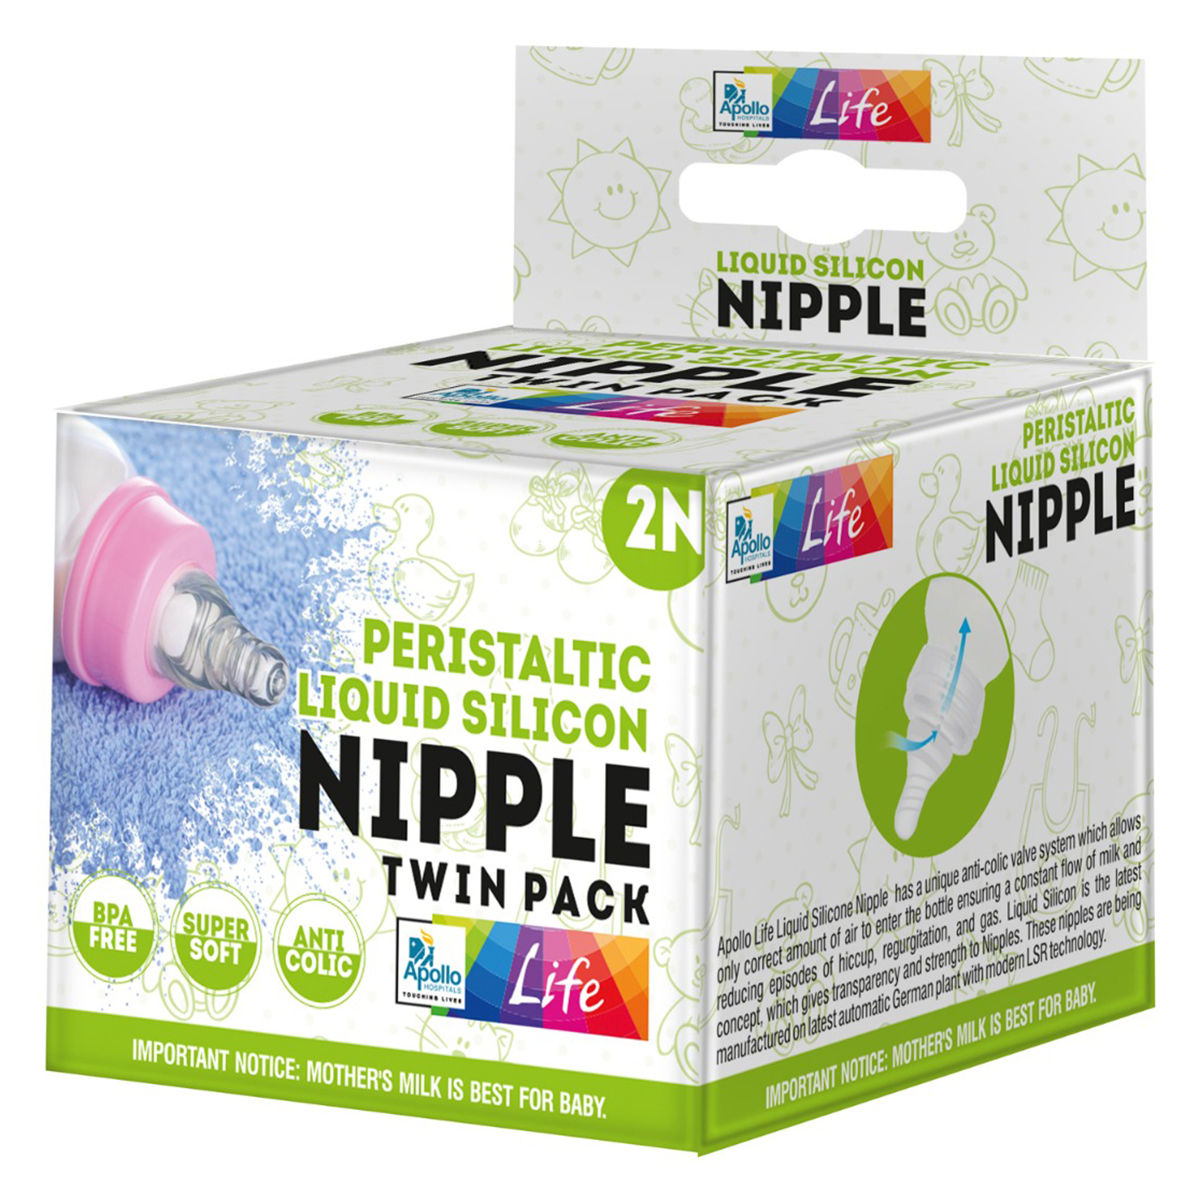 Buy Apollo Life Peristaltic Liquid Silicon Nipple Twin Pack, 2 Count Online